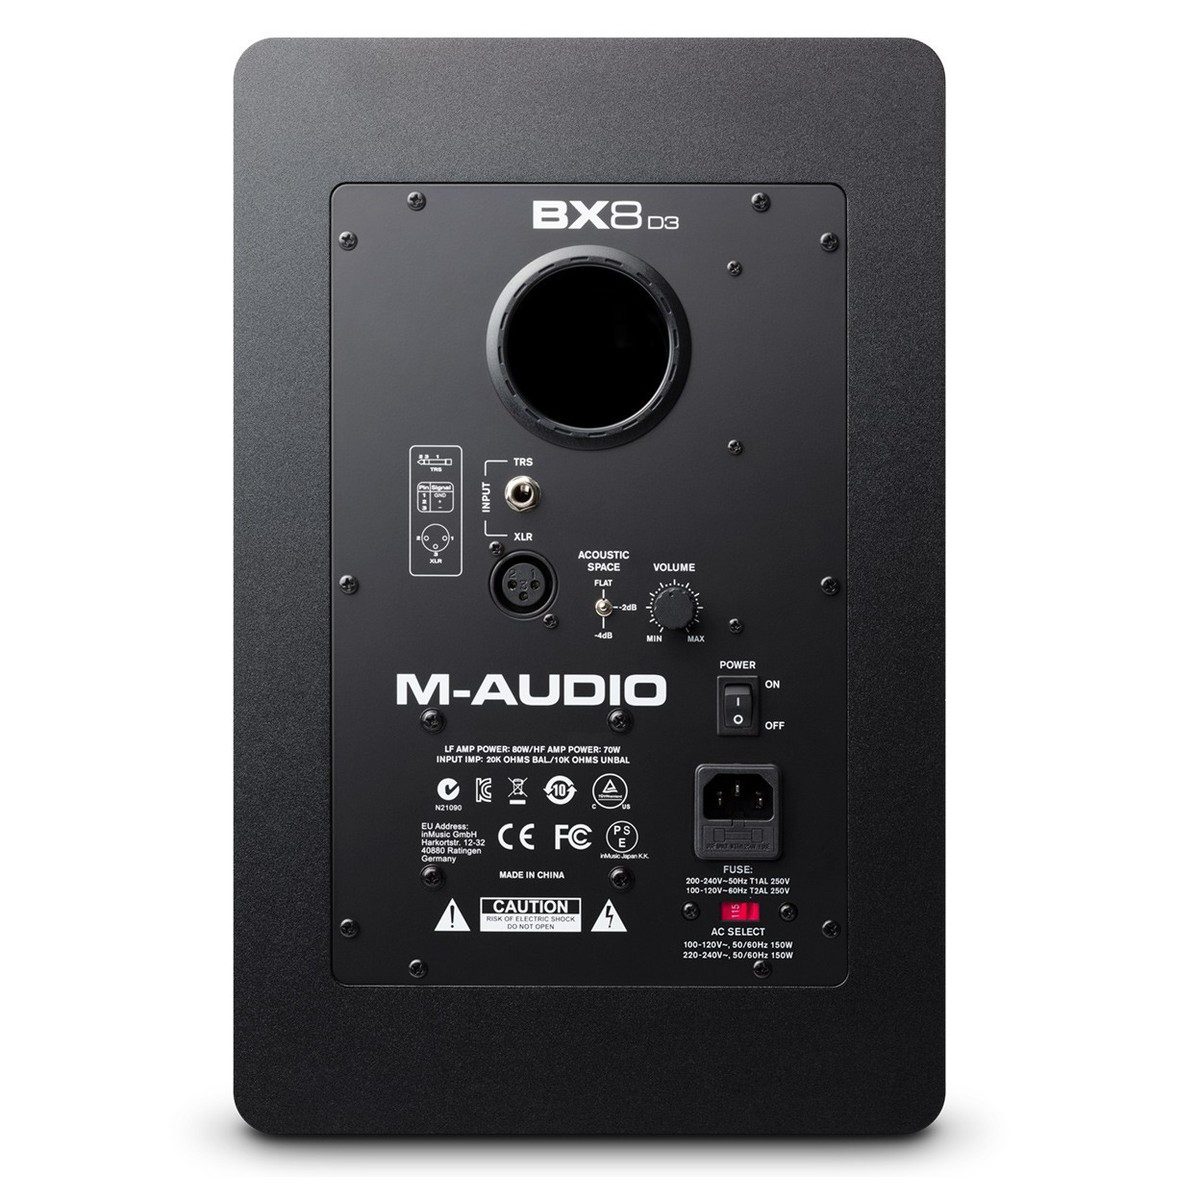 M-Audio BX8-D3 Studio Monitor